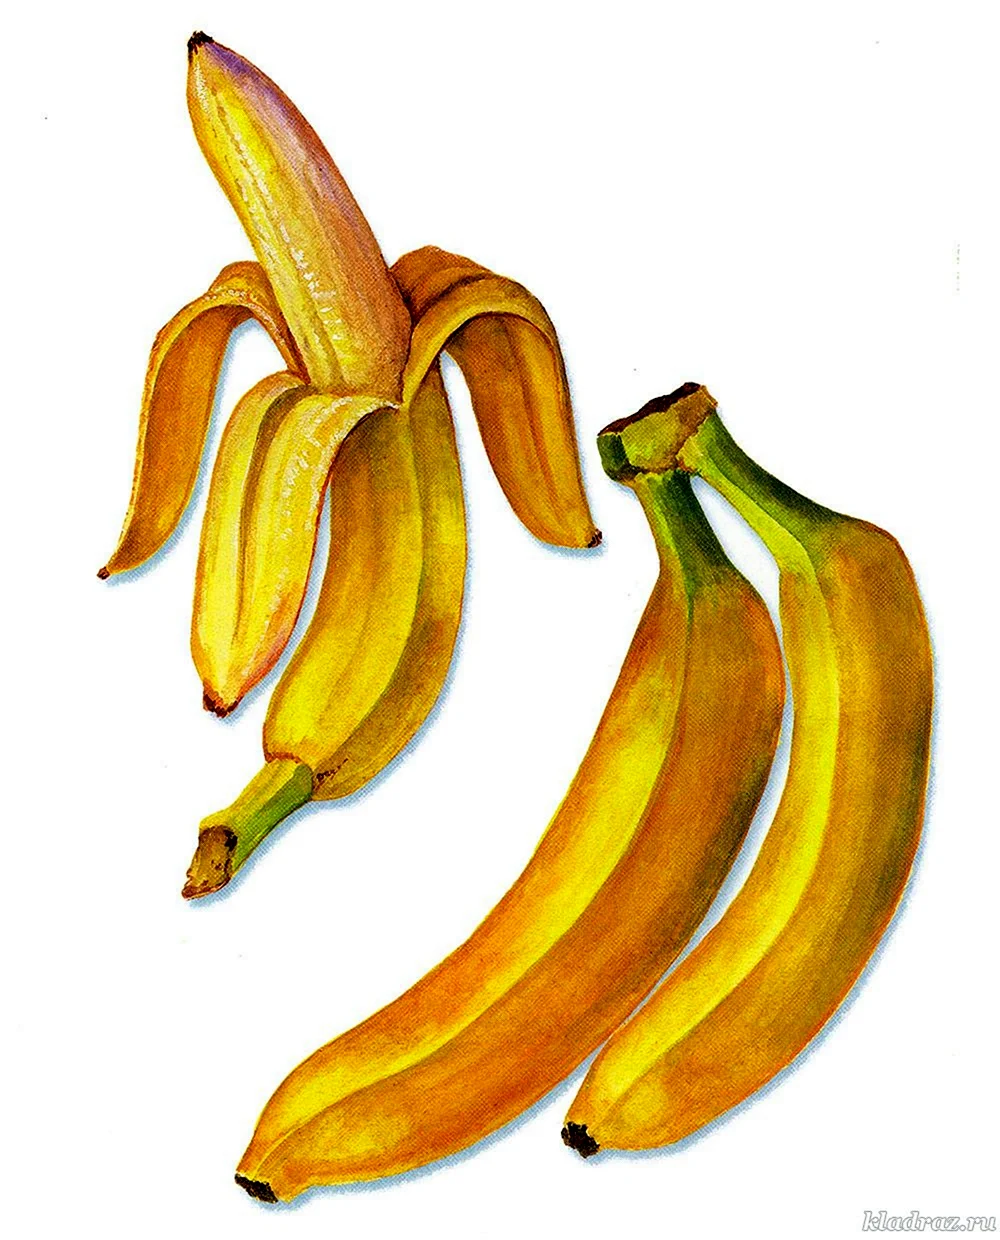 Банан карточка для детей